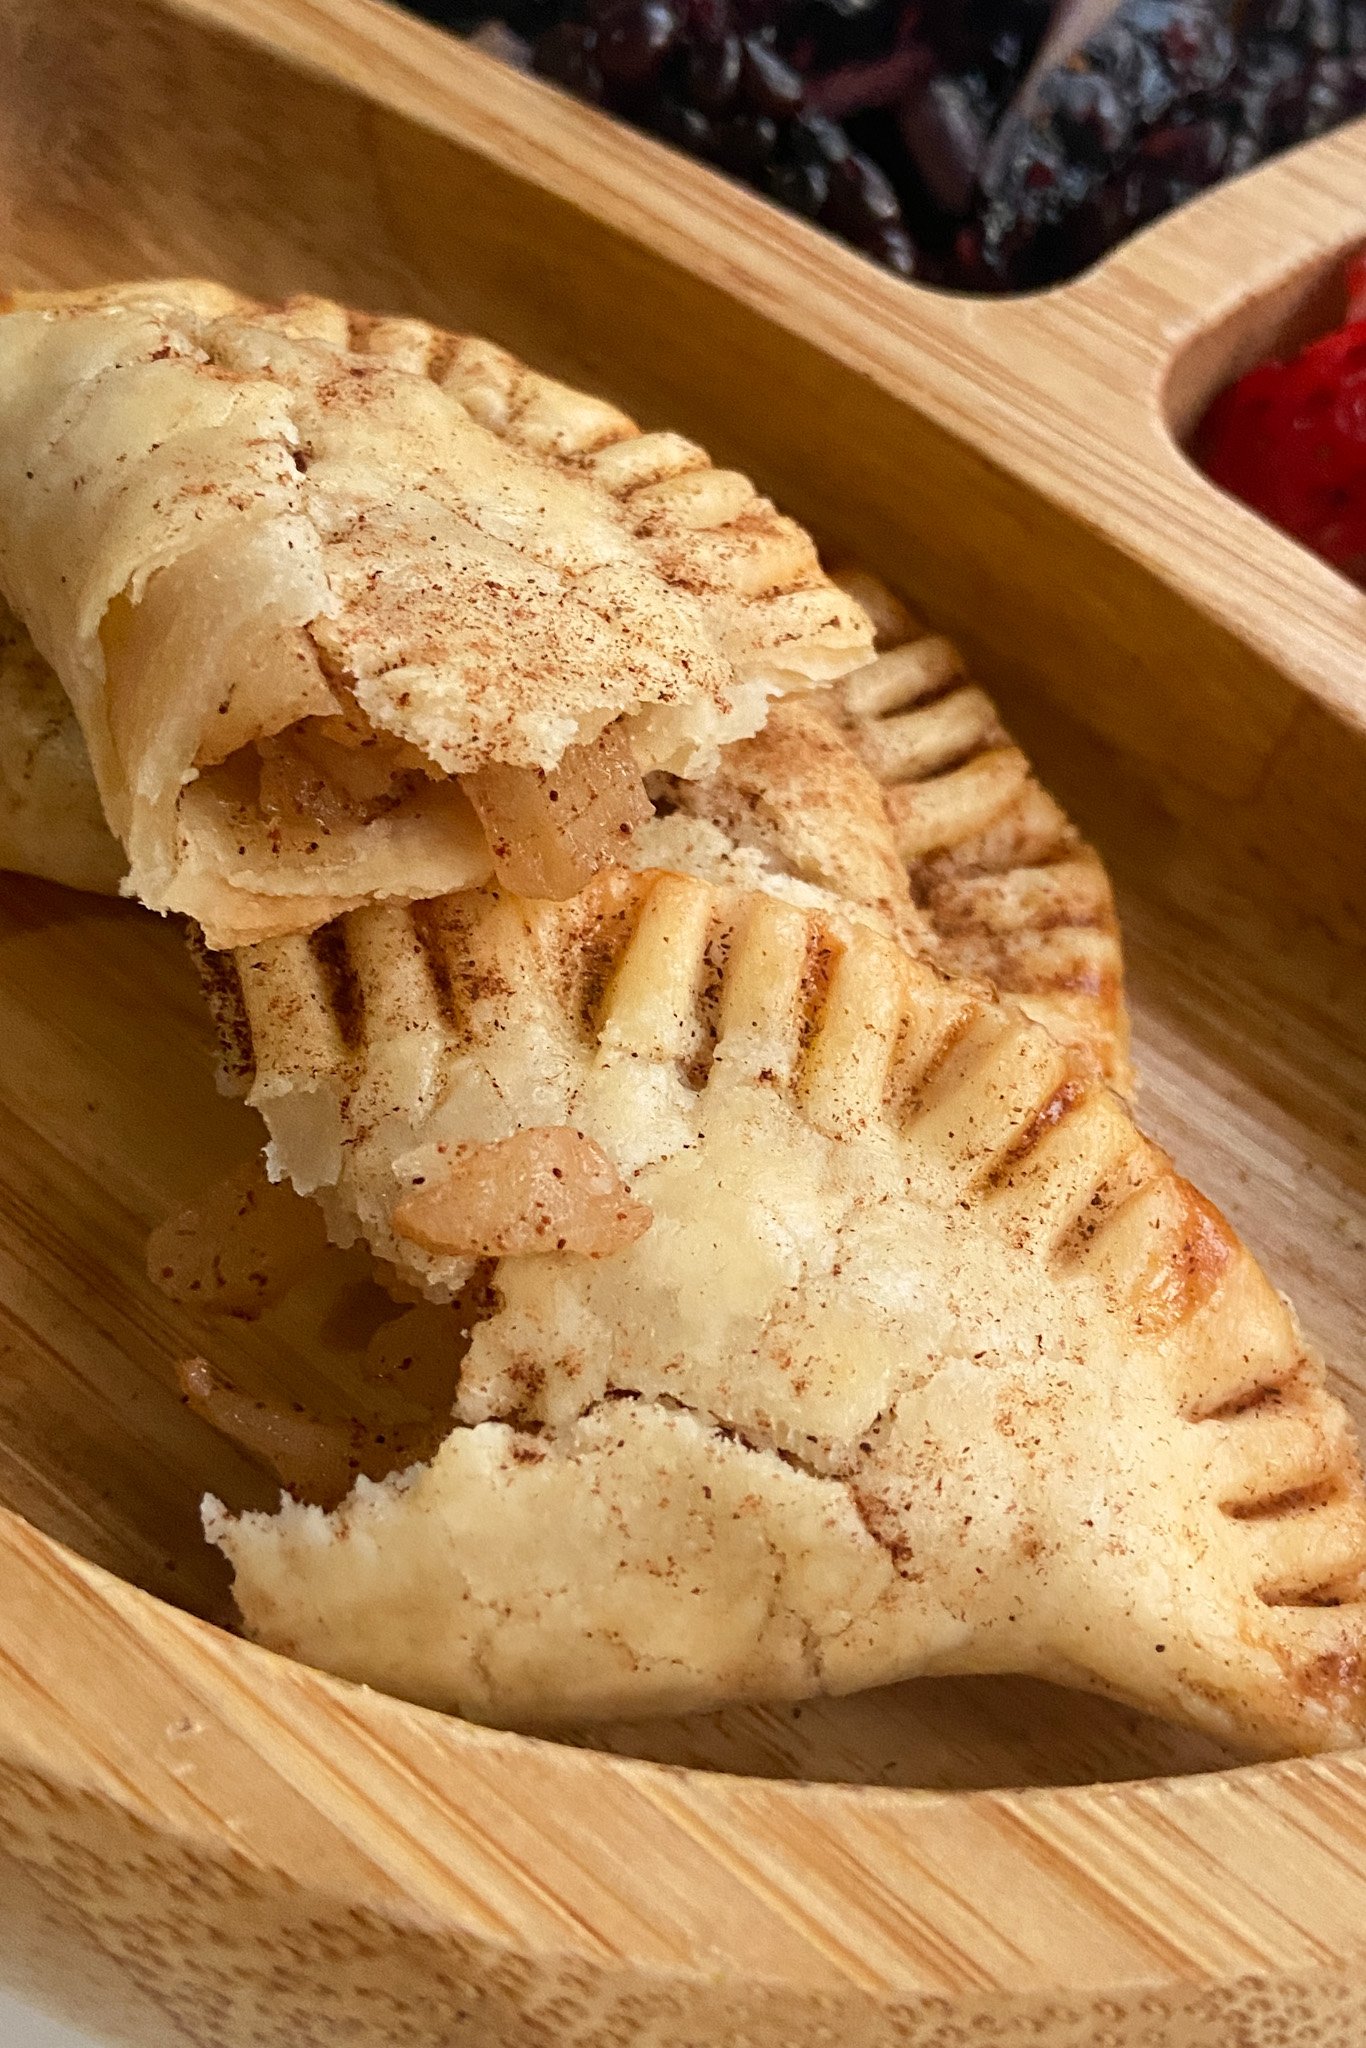 Apple pie empanadas with cinnamon apple pieces